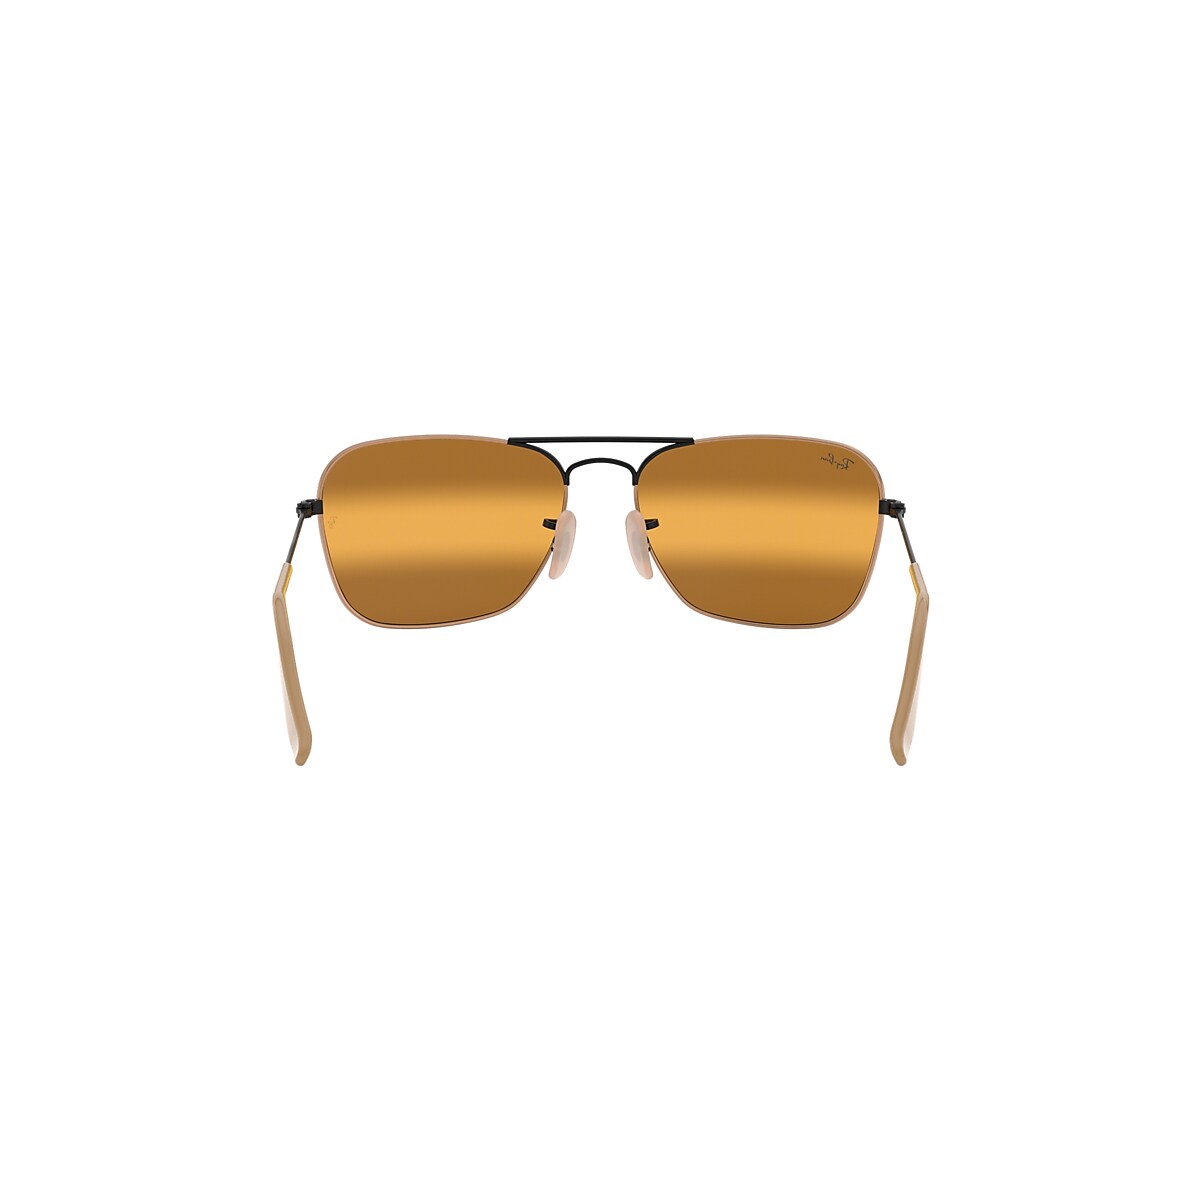 Discomfort Furious Privilege Caravan Sunglasses in Black On Top Matte Beige and Yellow | Ray-Ban®